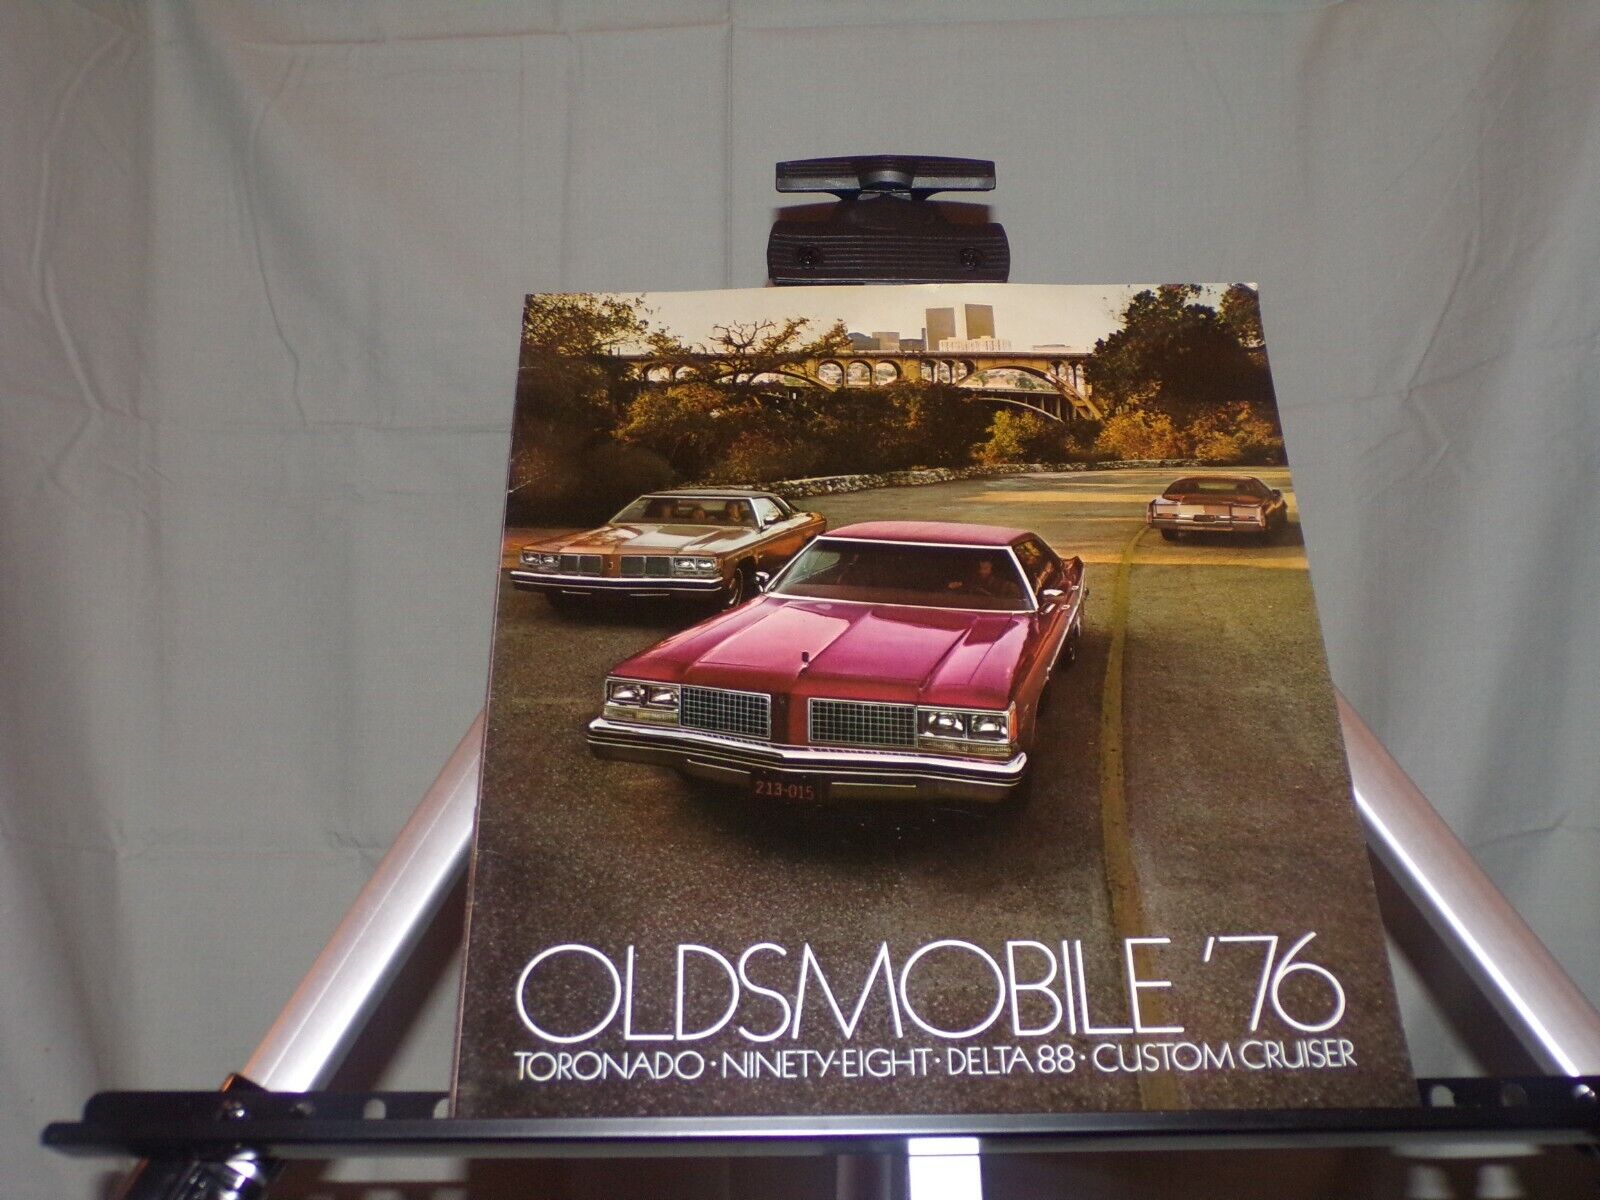 Original New Car Sales Brochure 1976 Oldsmobile All Models 98 88 Toronado Wagons